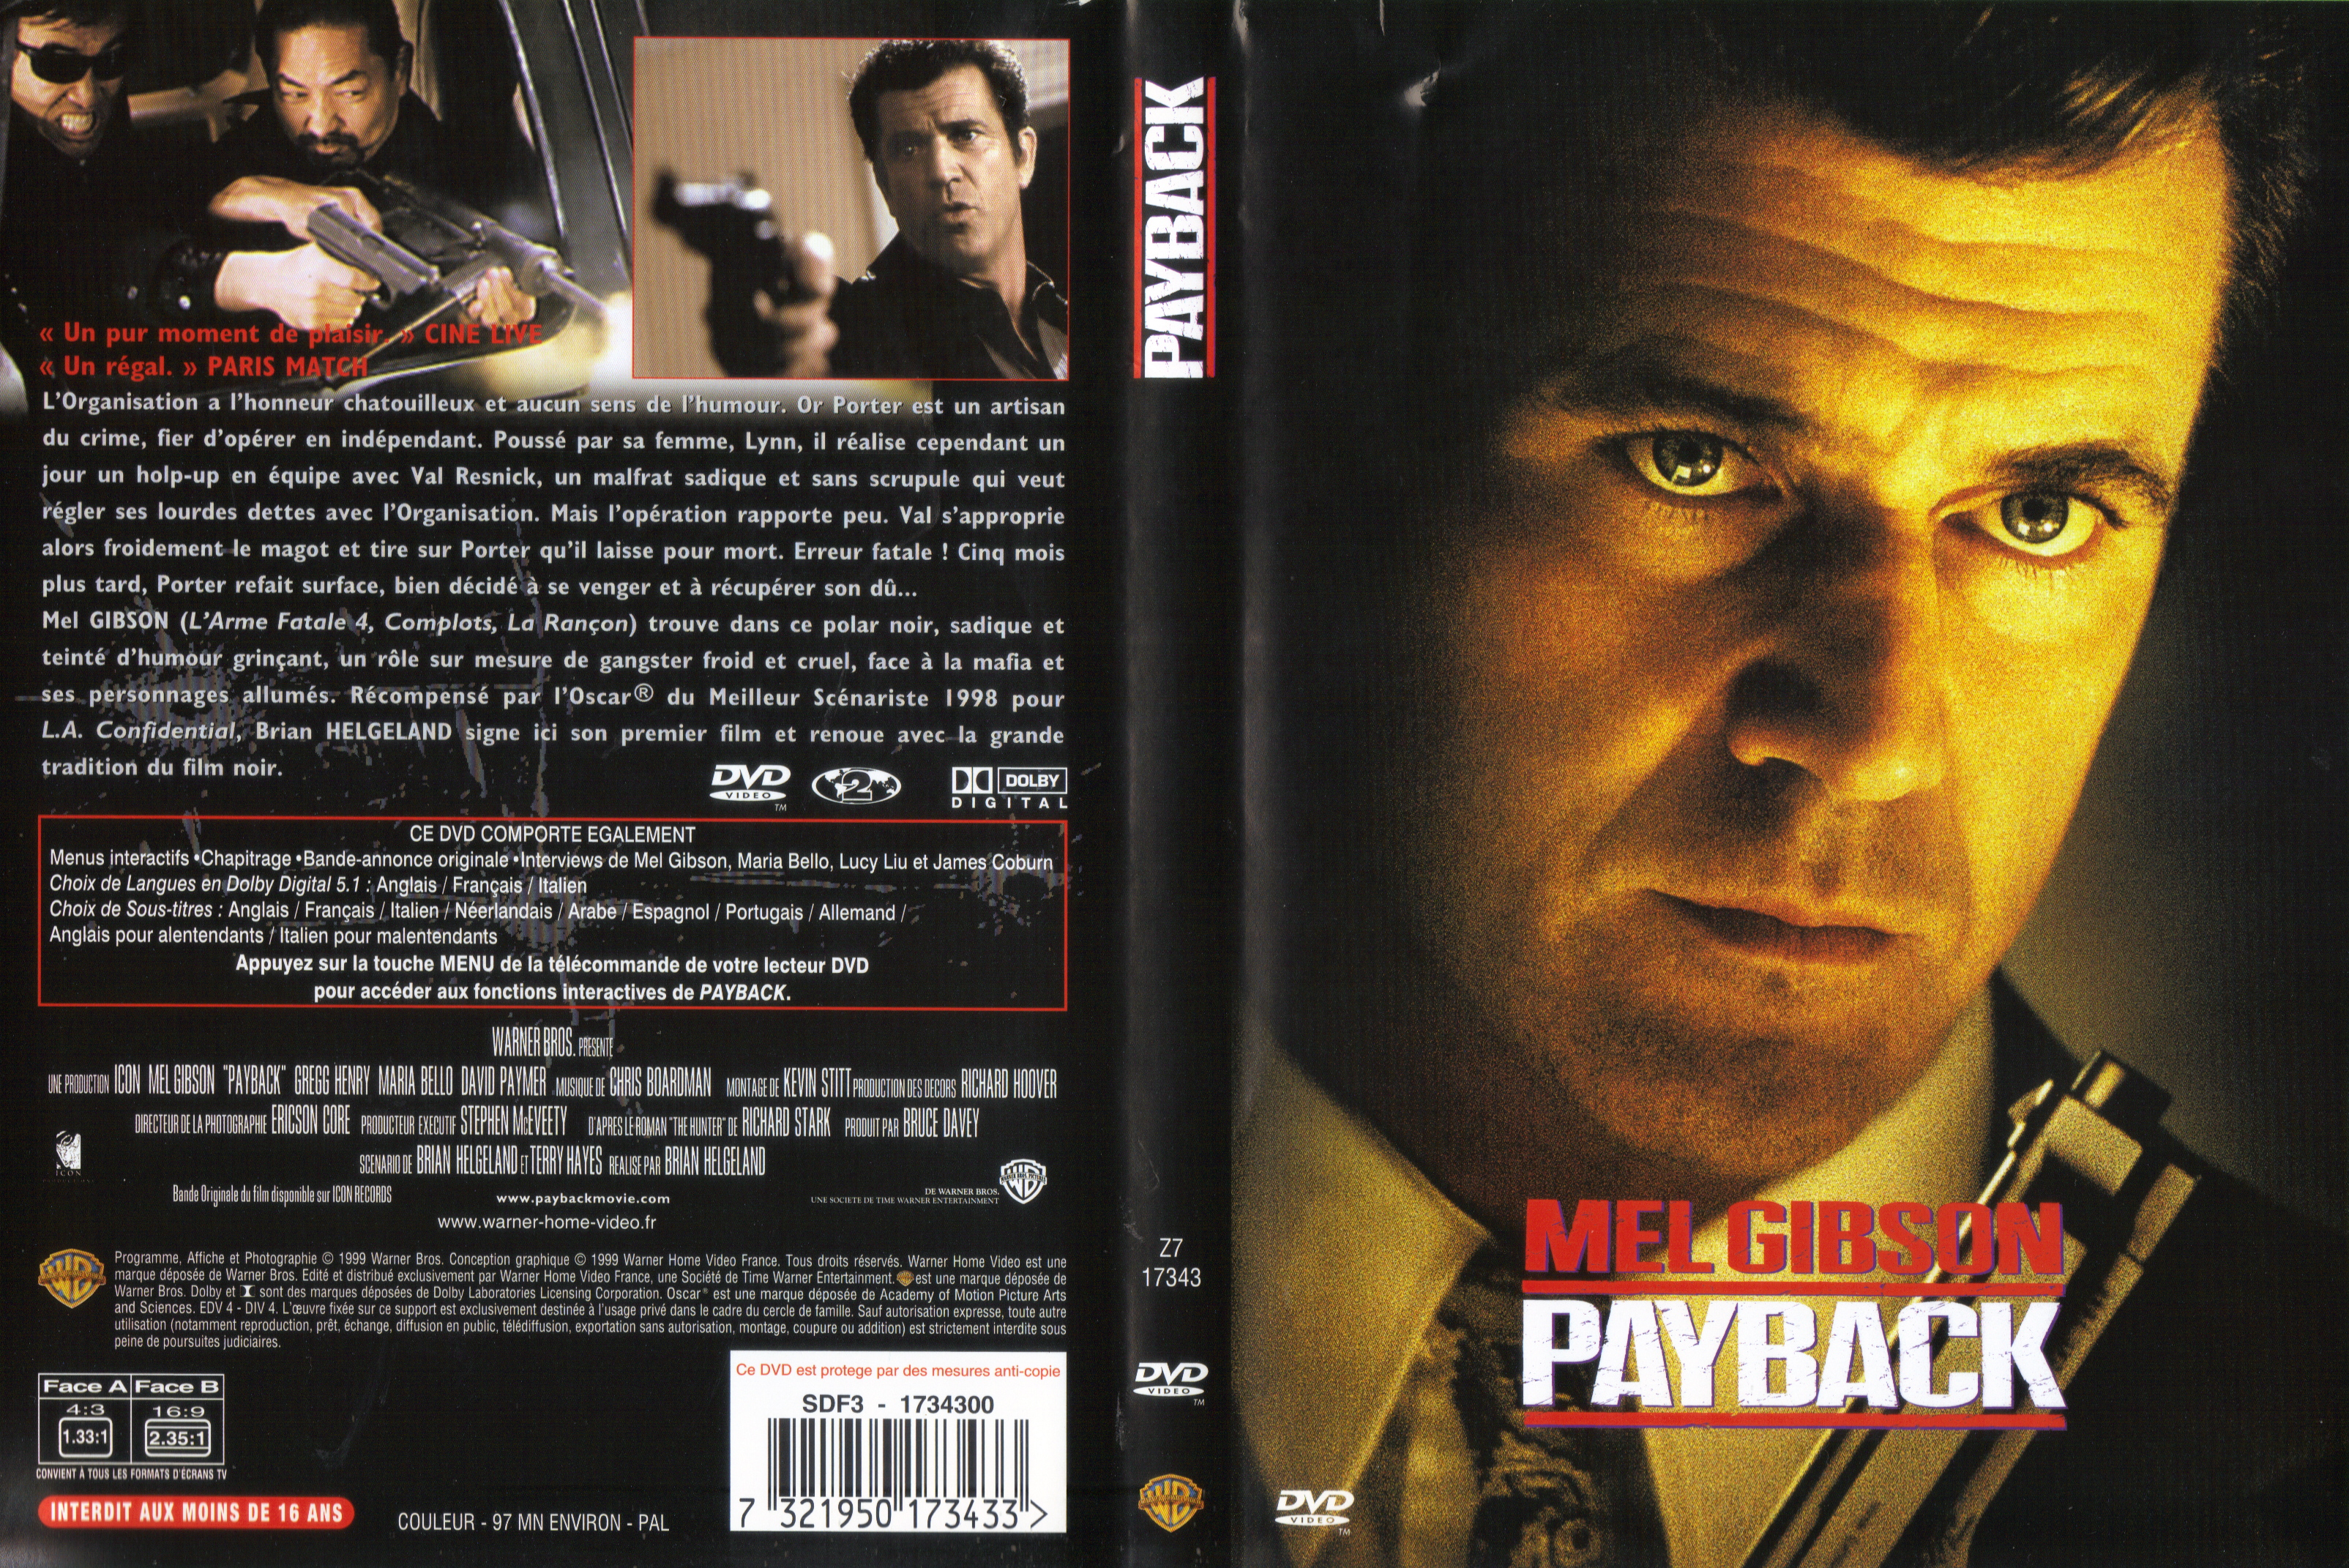 Jaquette DVD Payback v2